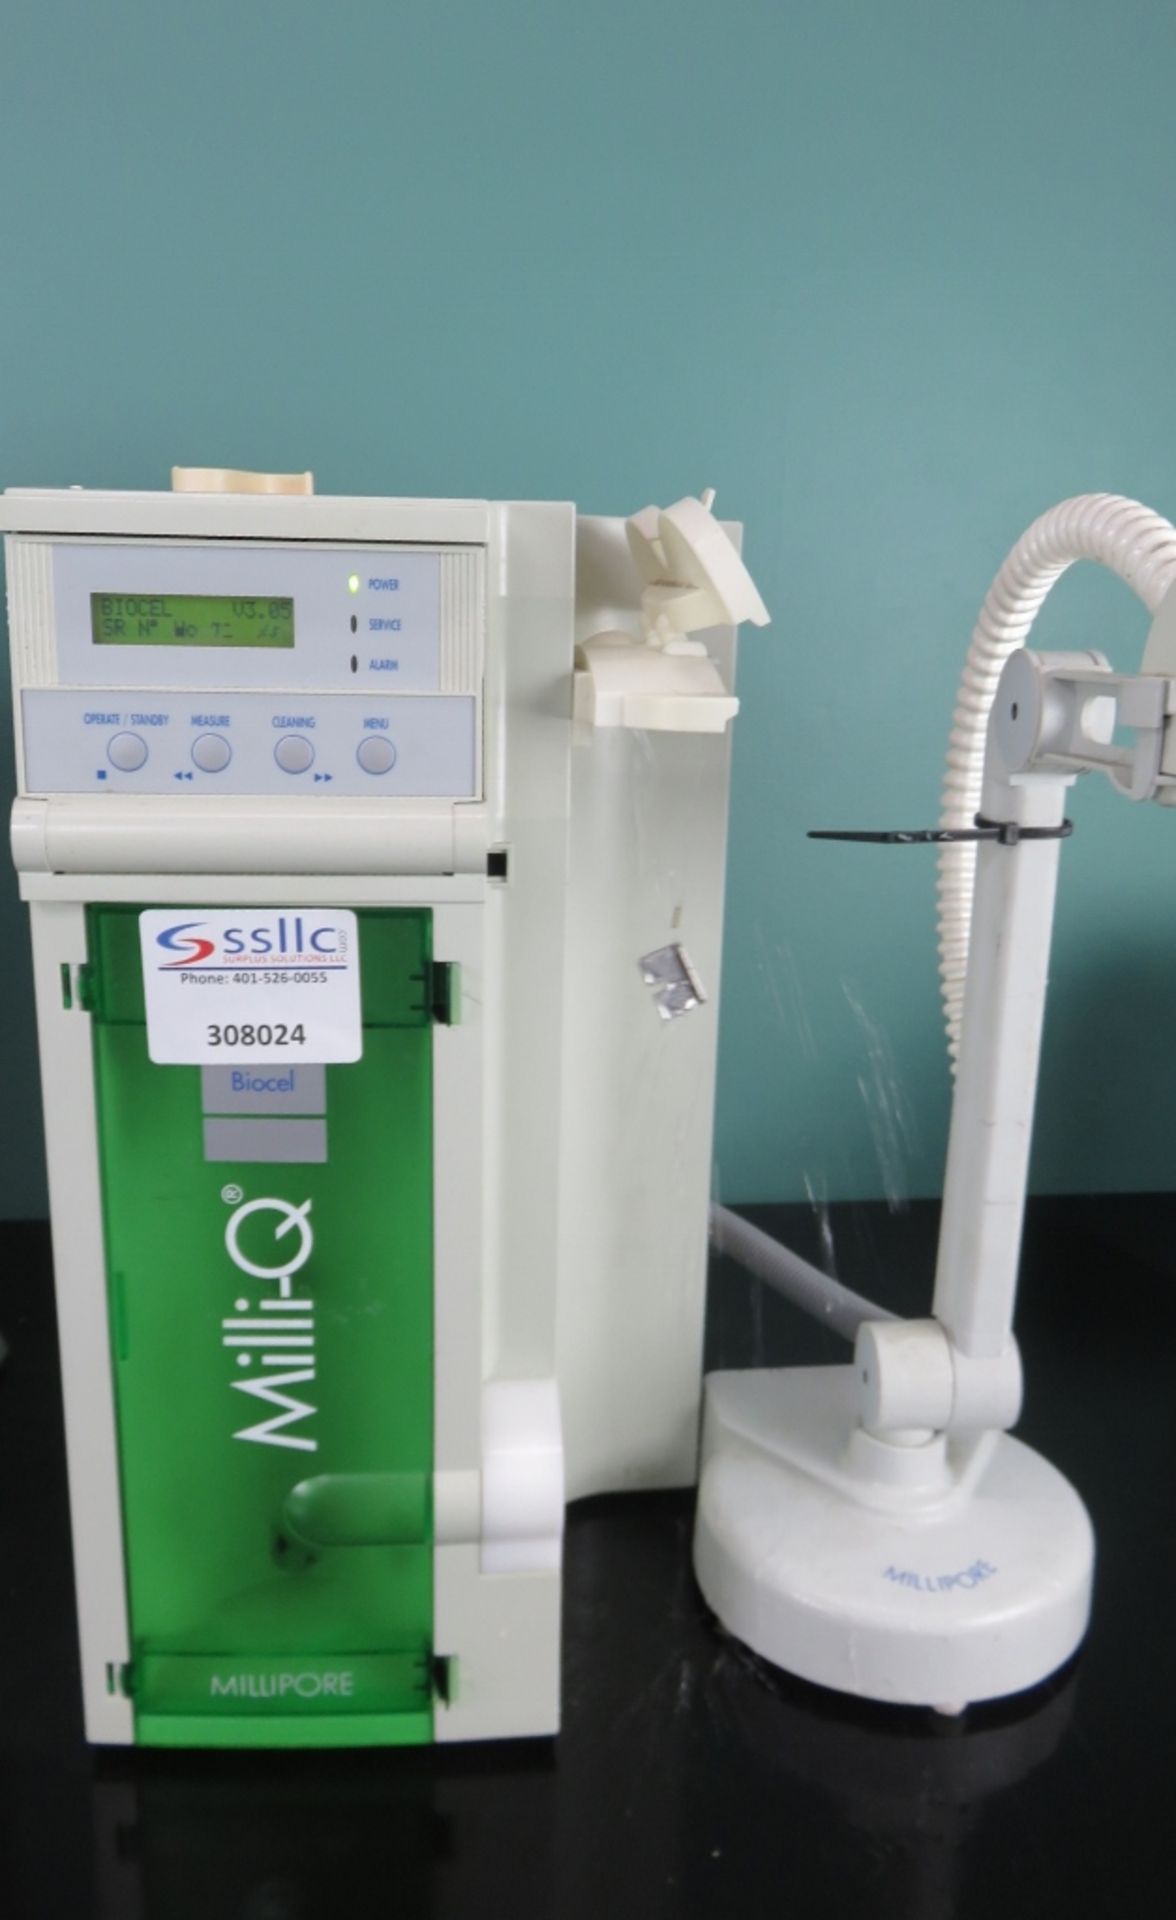 Millipore MilliQ Biocel Water Purification System